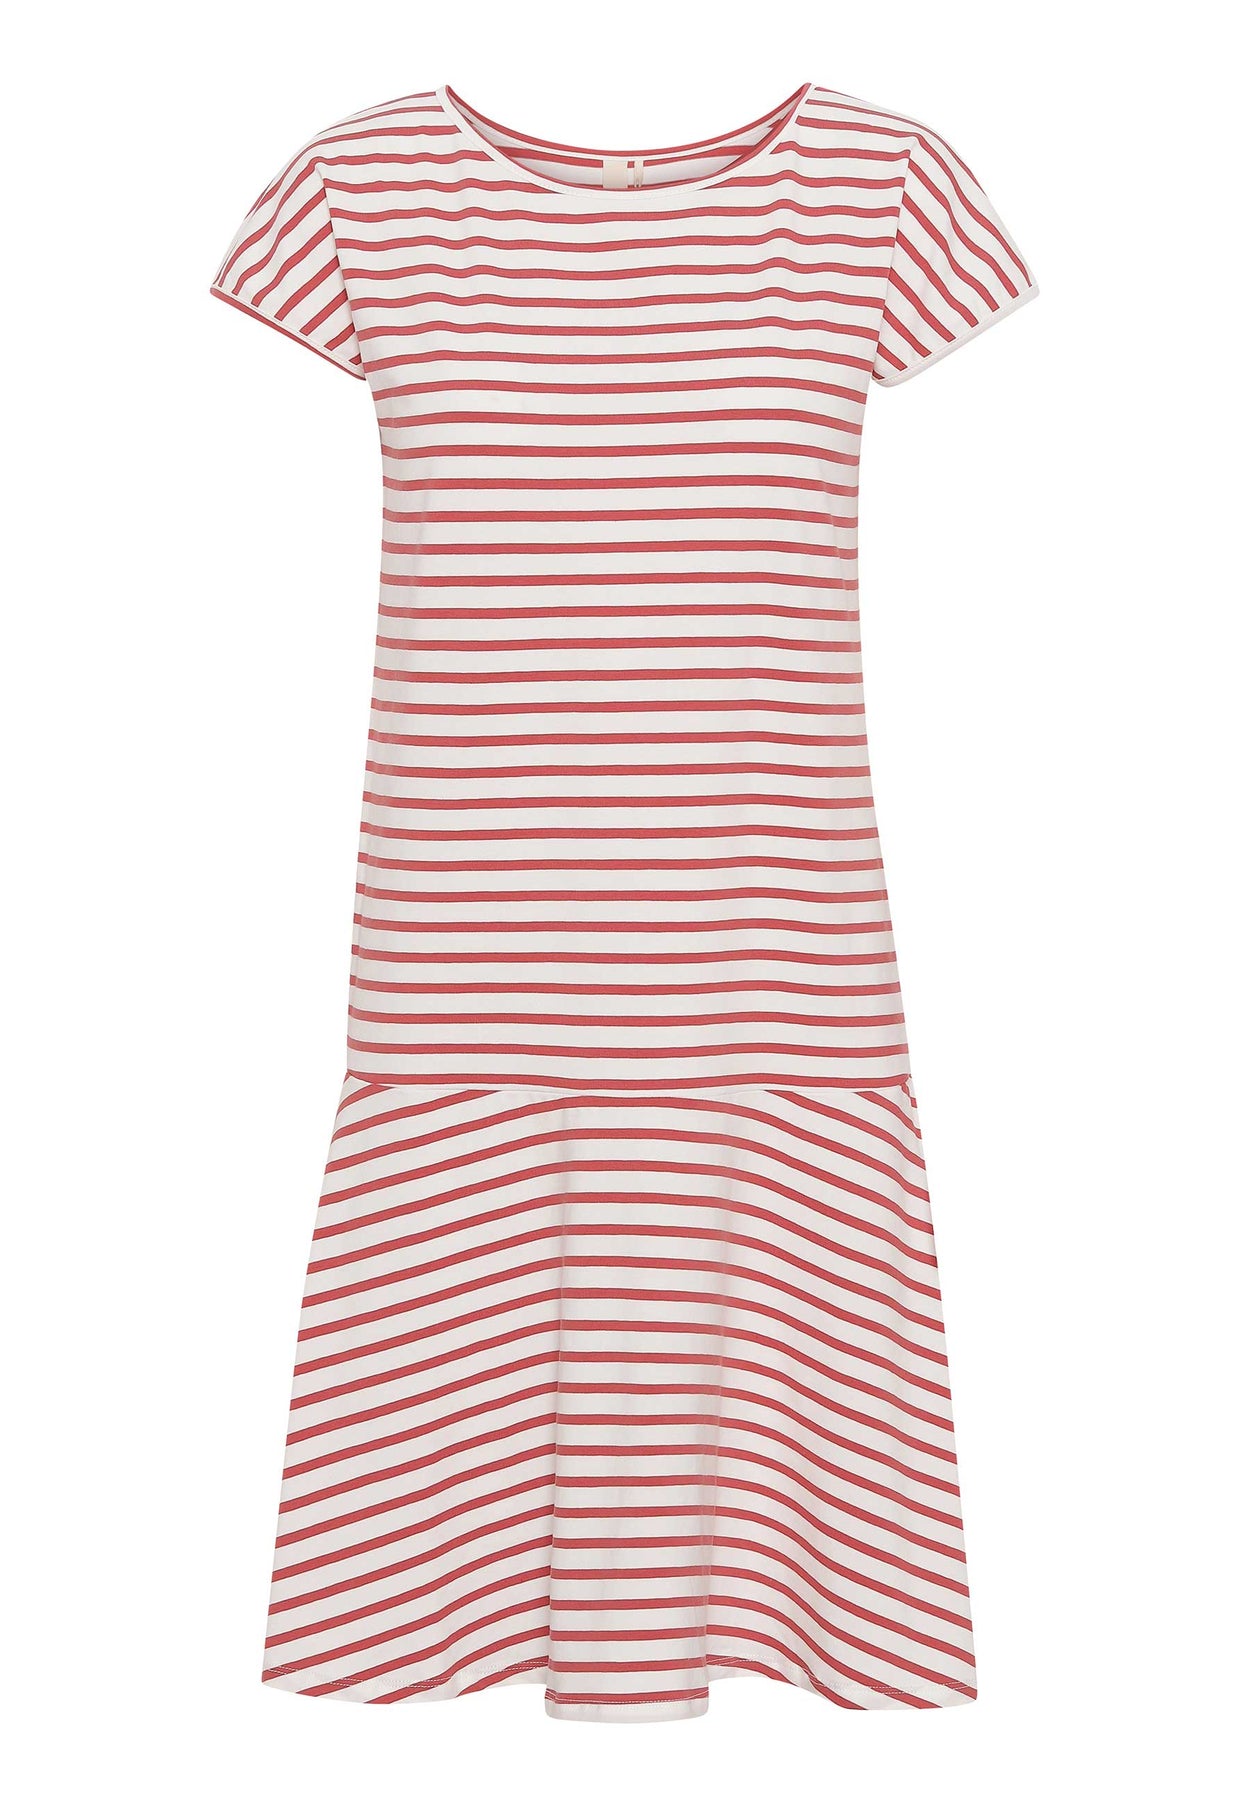 GROBUND Marianne kjolen - den med ribsrøde striber